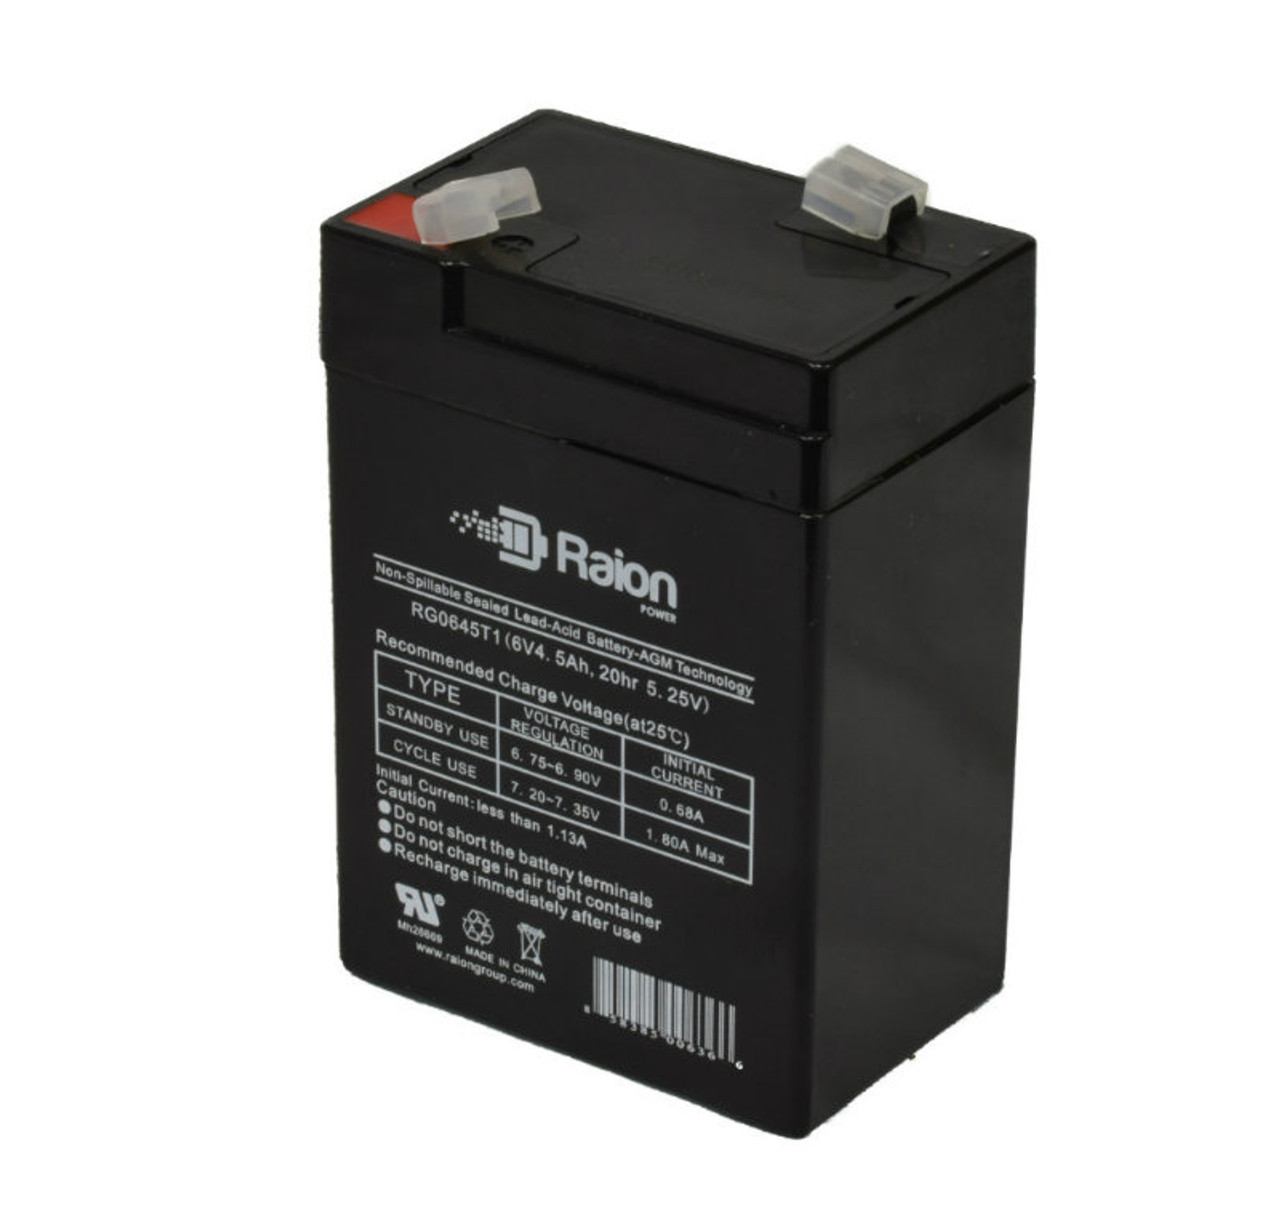 Raion Power RG0645T1 6V 4.5Ah Replacement Battery Cartridge for Emergi-Lite ILC1002V